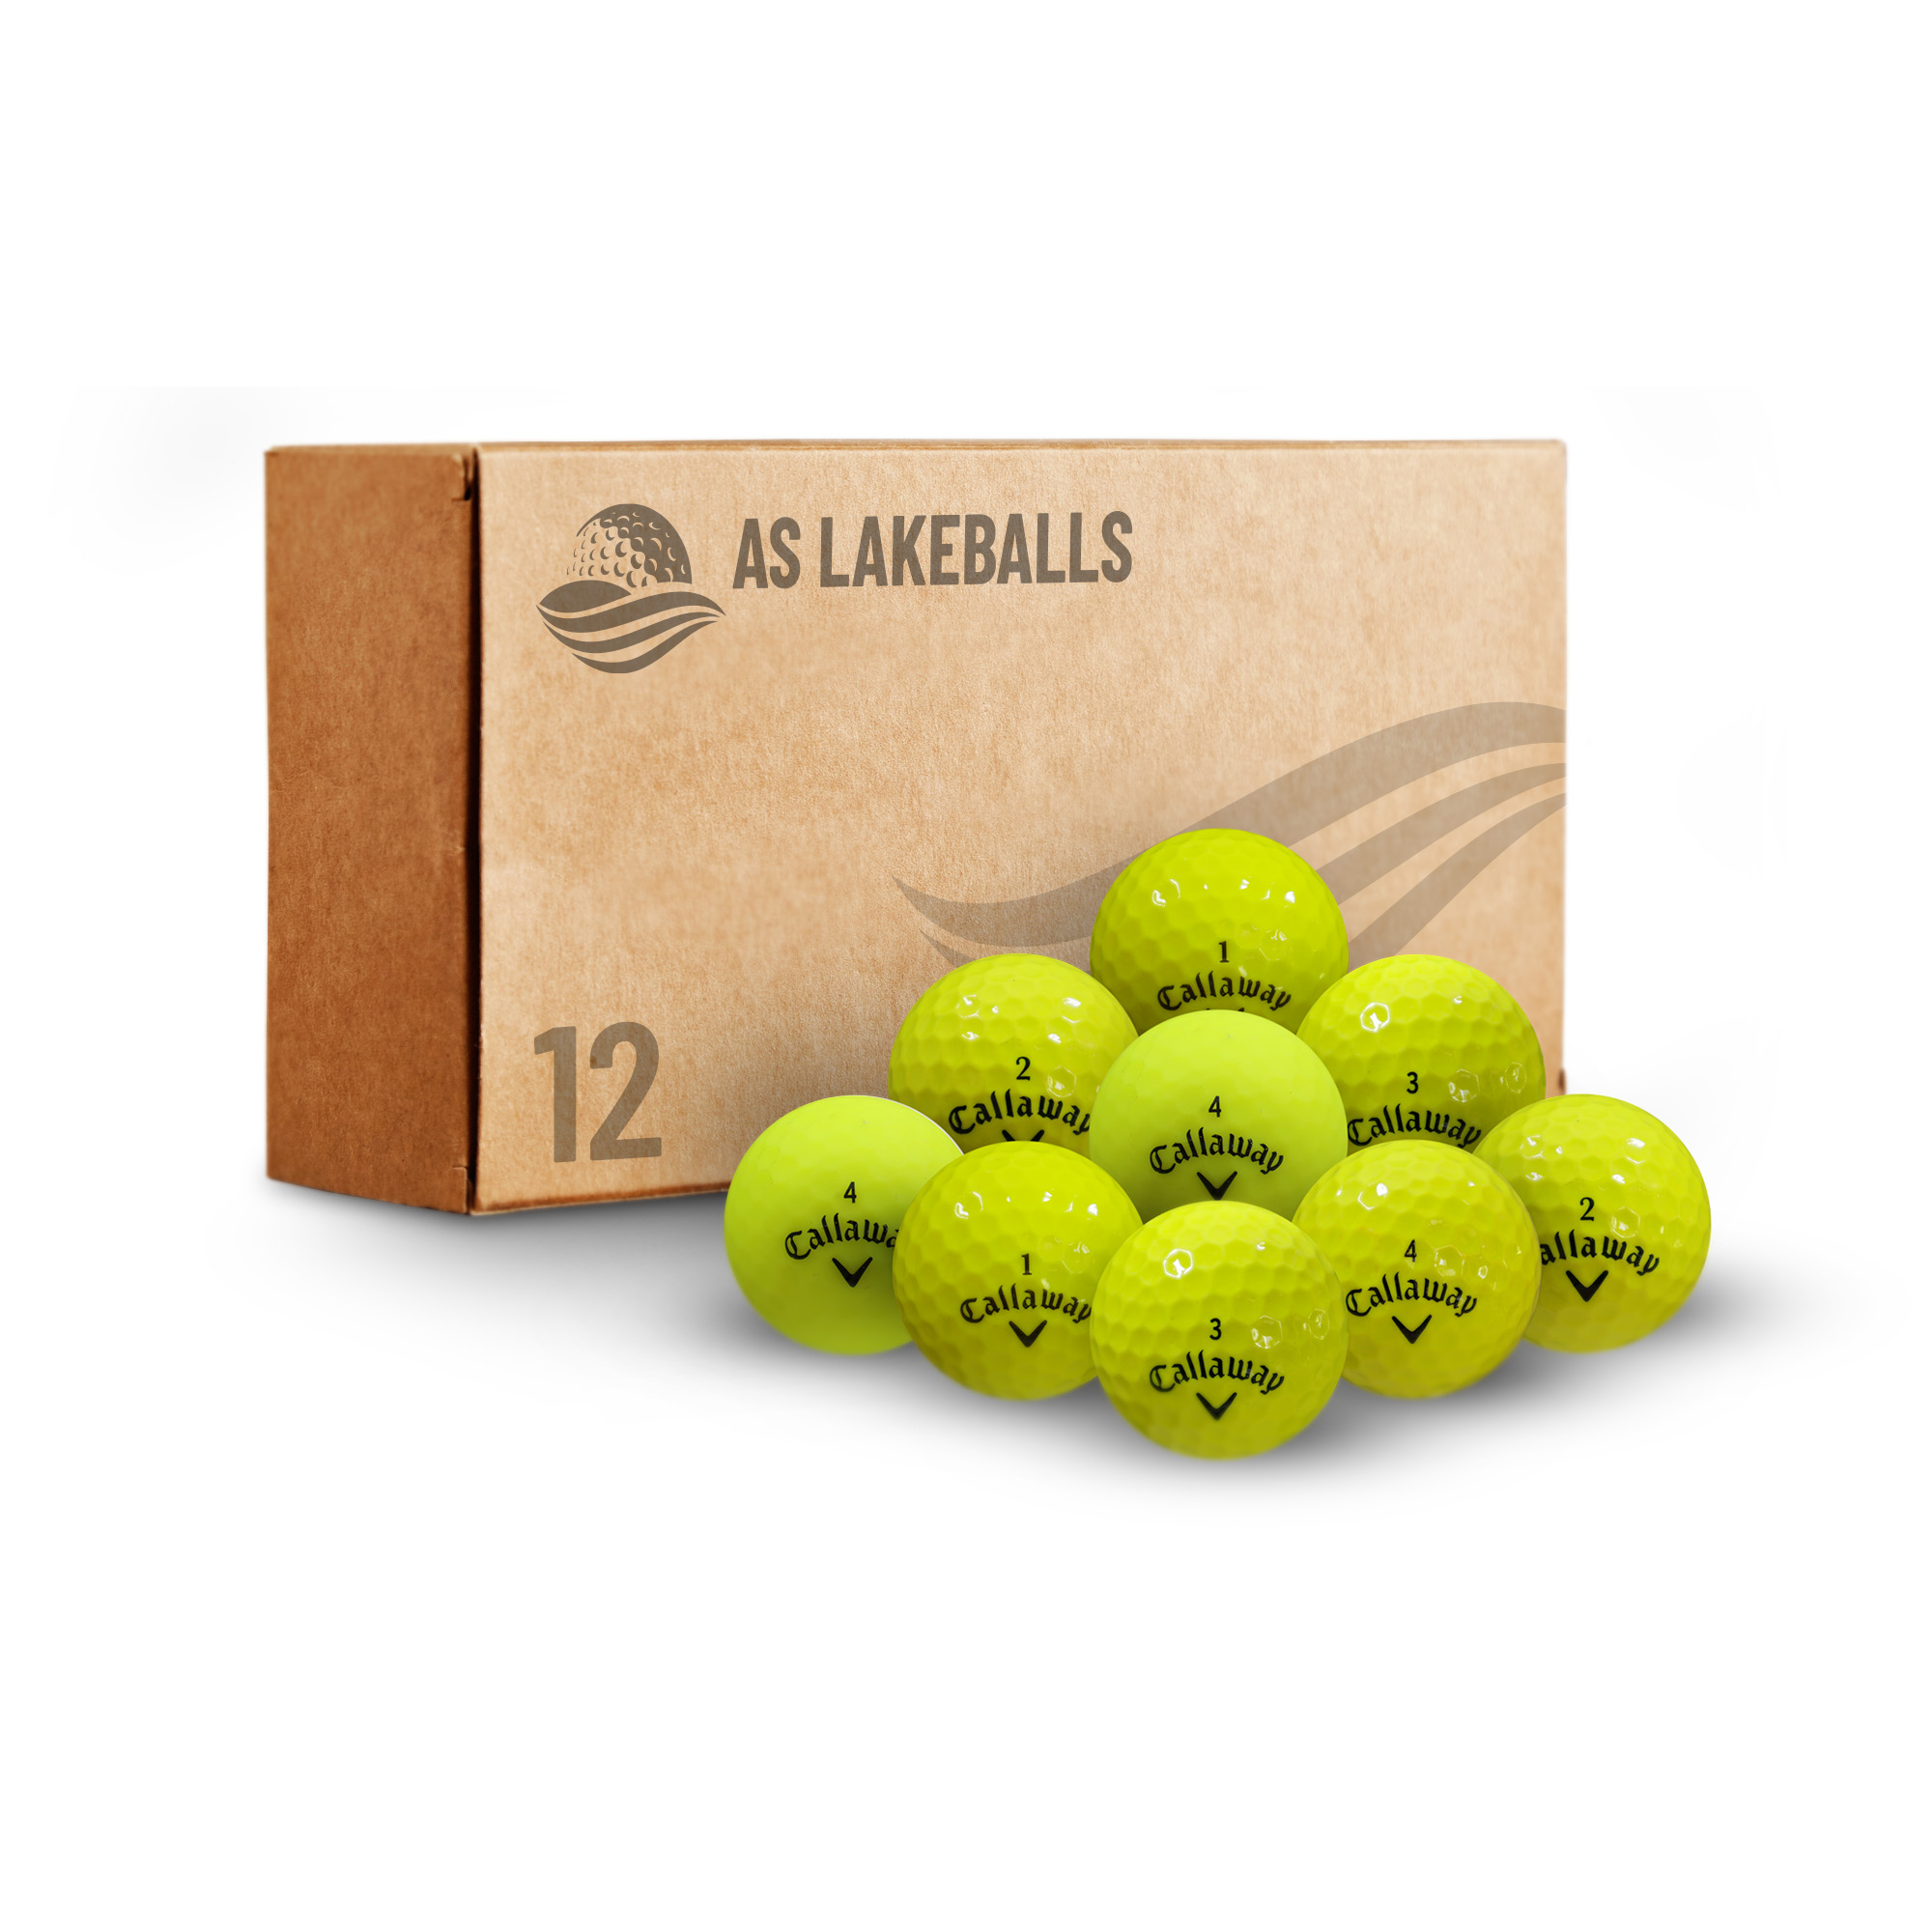 12 Stück Callaway mix Premium Gelb AA-AAA Lakeballs bei AS Lakeballs günstig kaufen